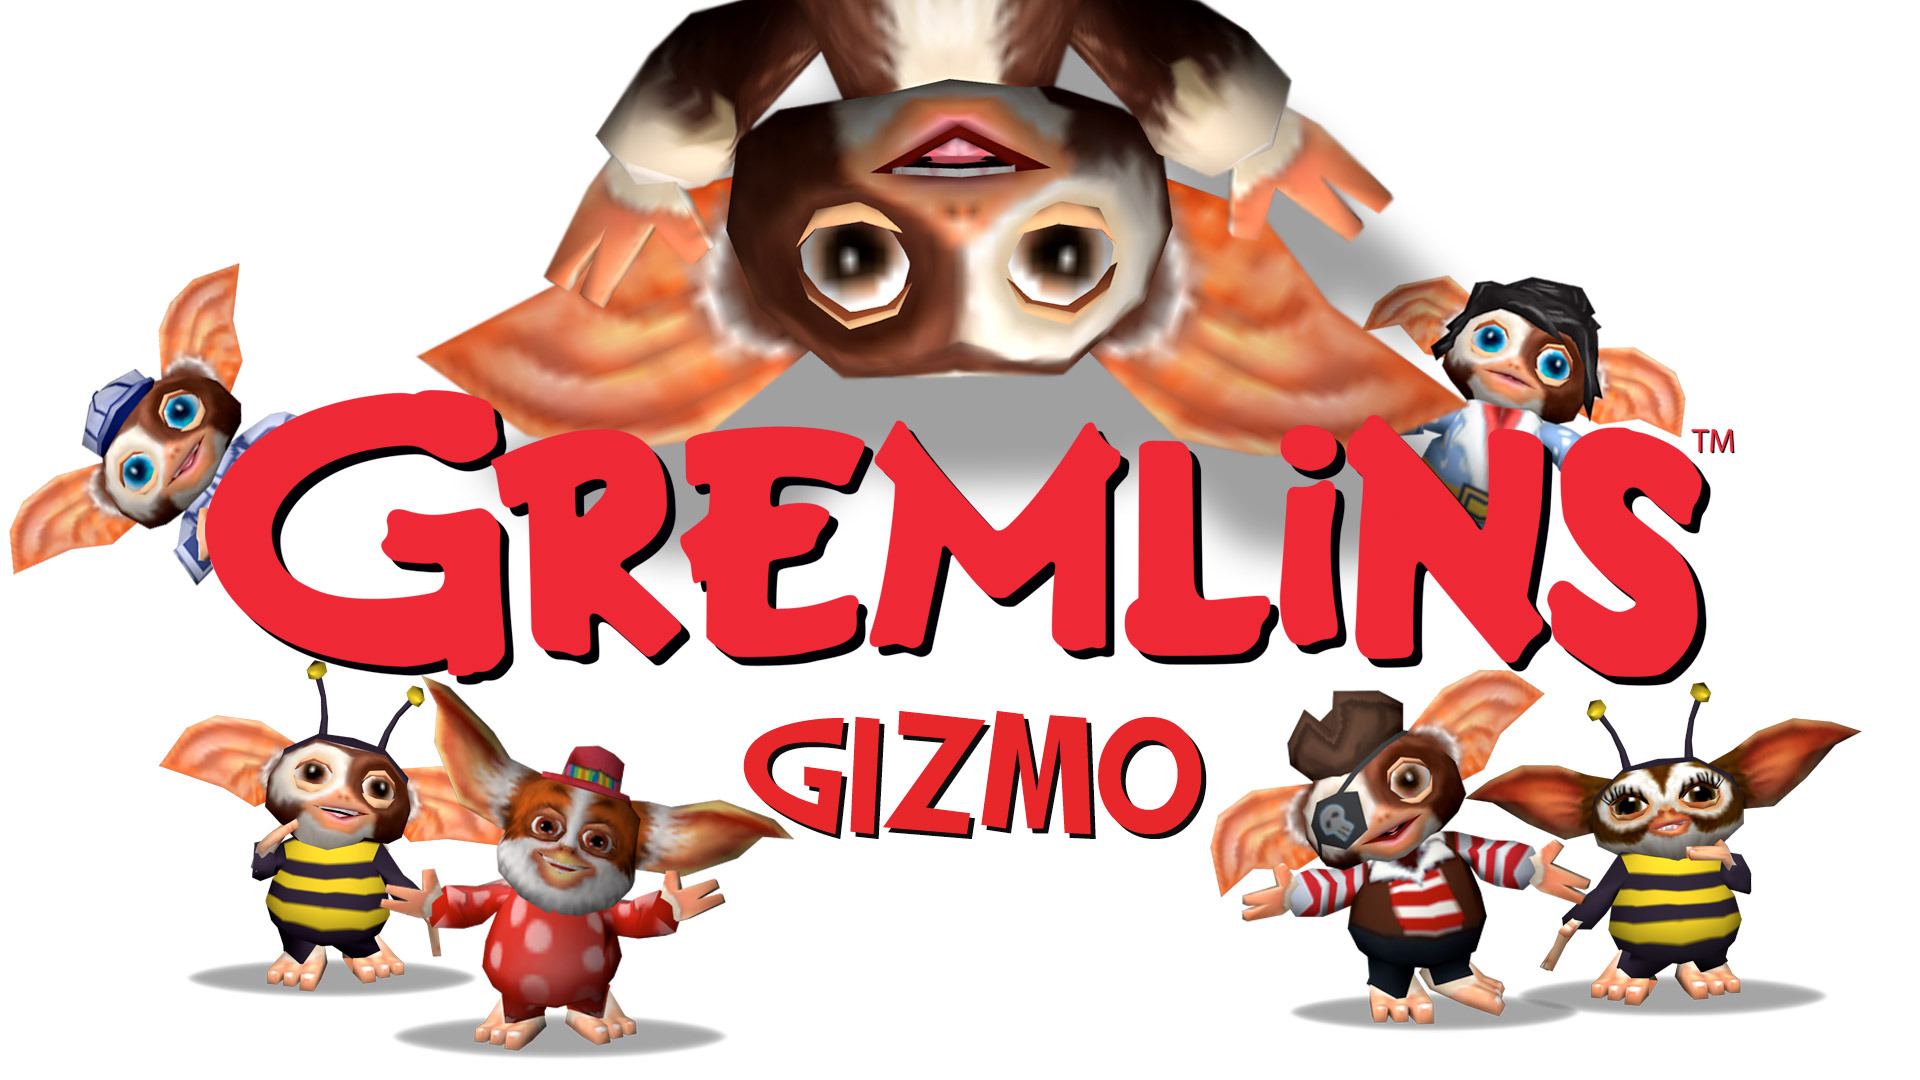 Gizmo Gremlins Image Thecelebritypix